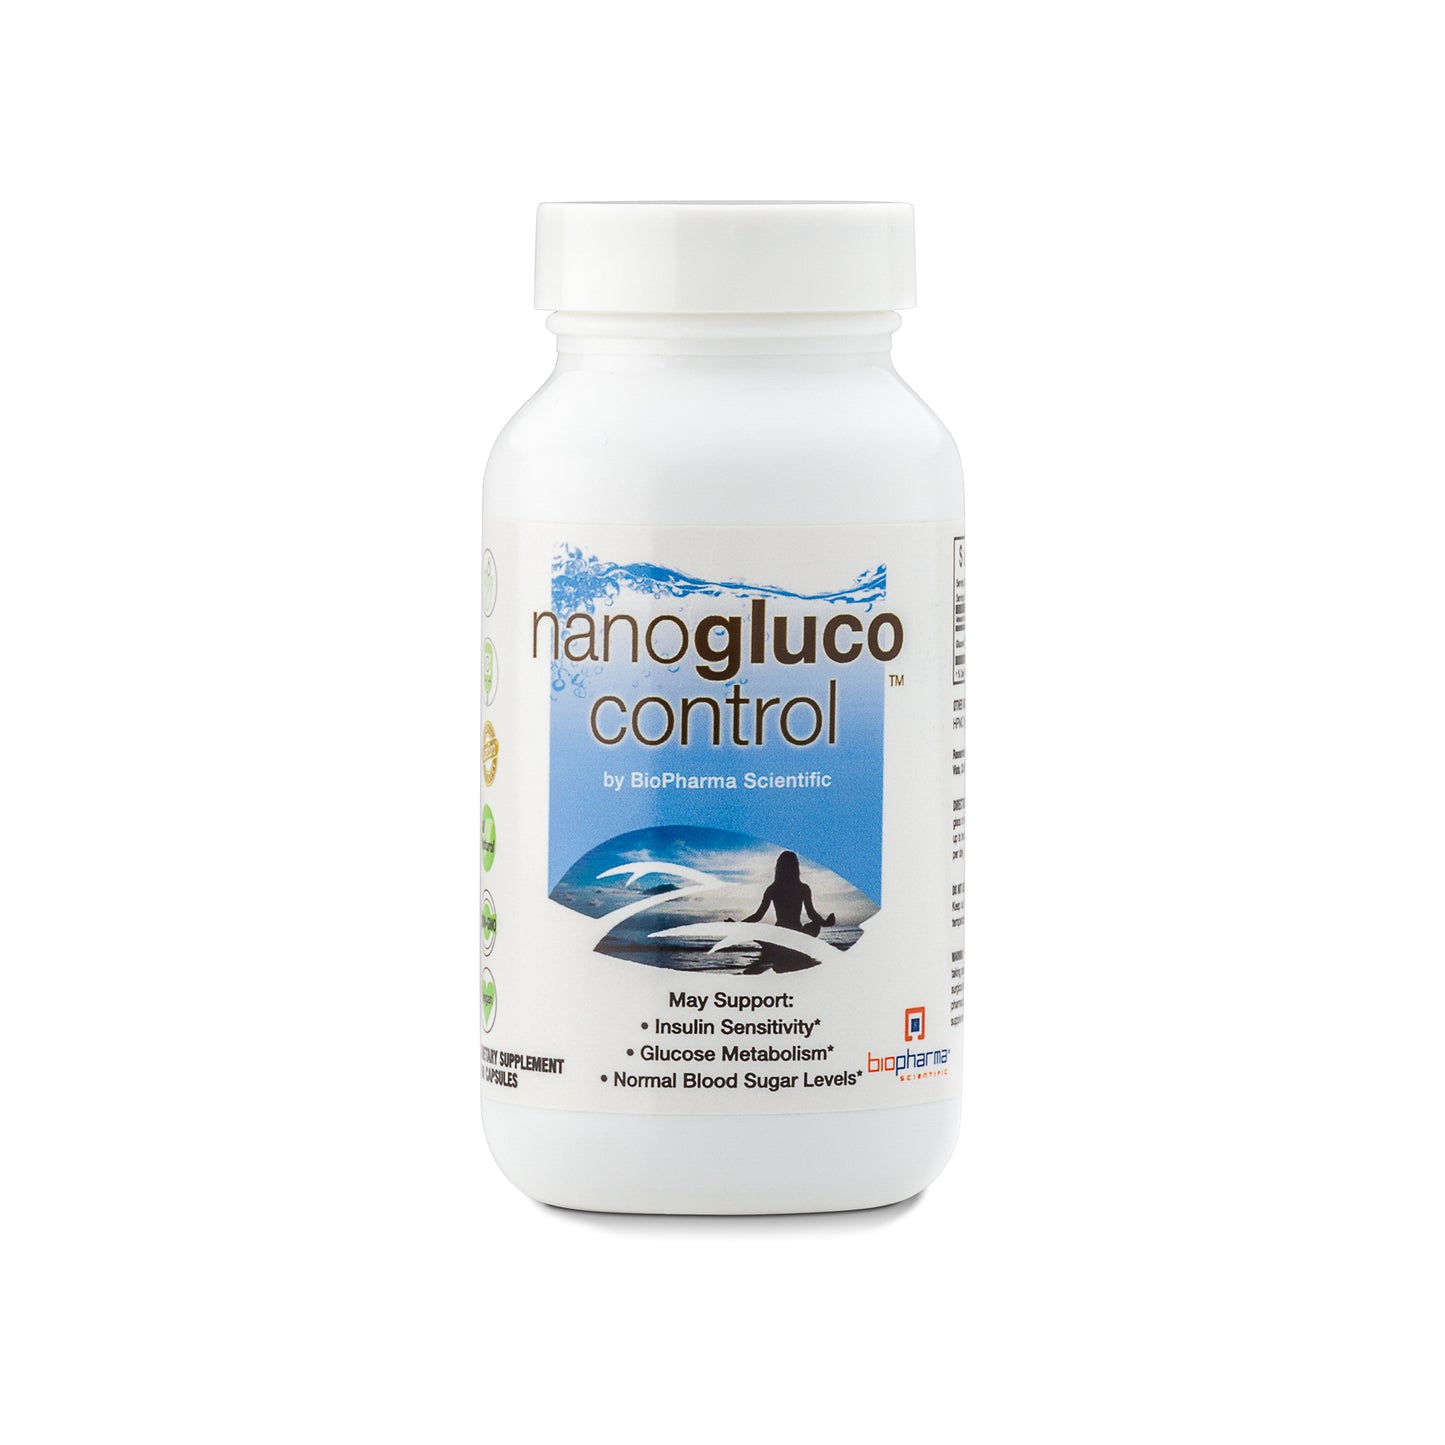 nanogluco control glucose control capsules for diabetics diabetes health glucose metabolism supplement - front side